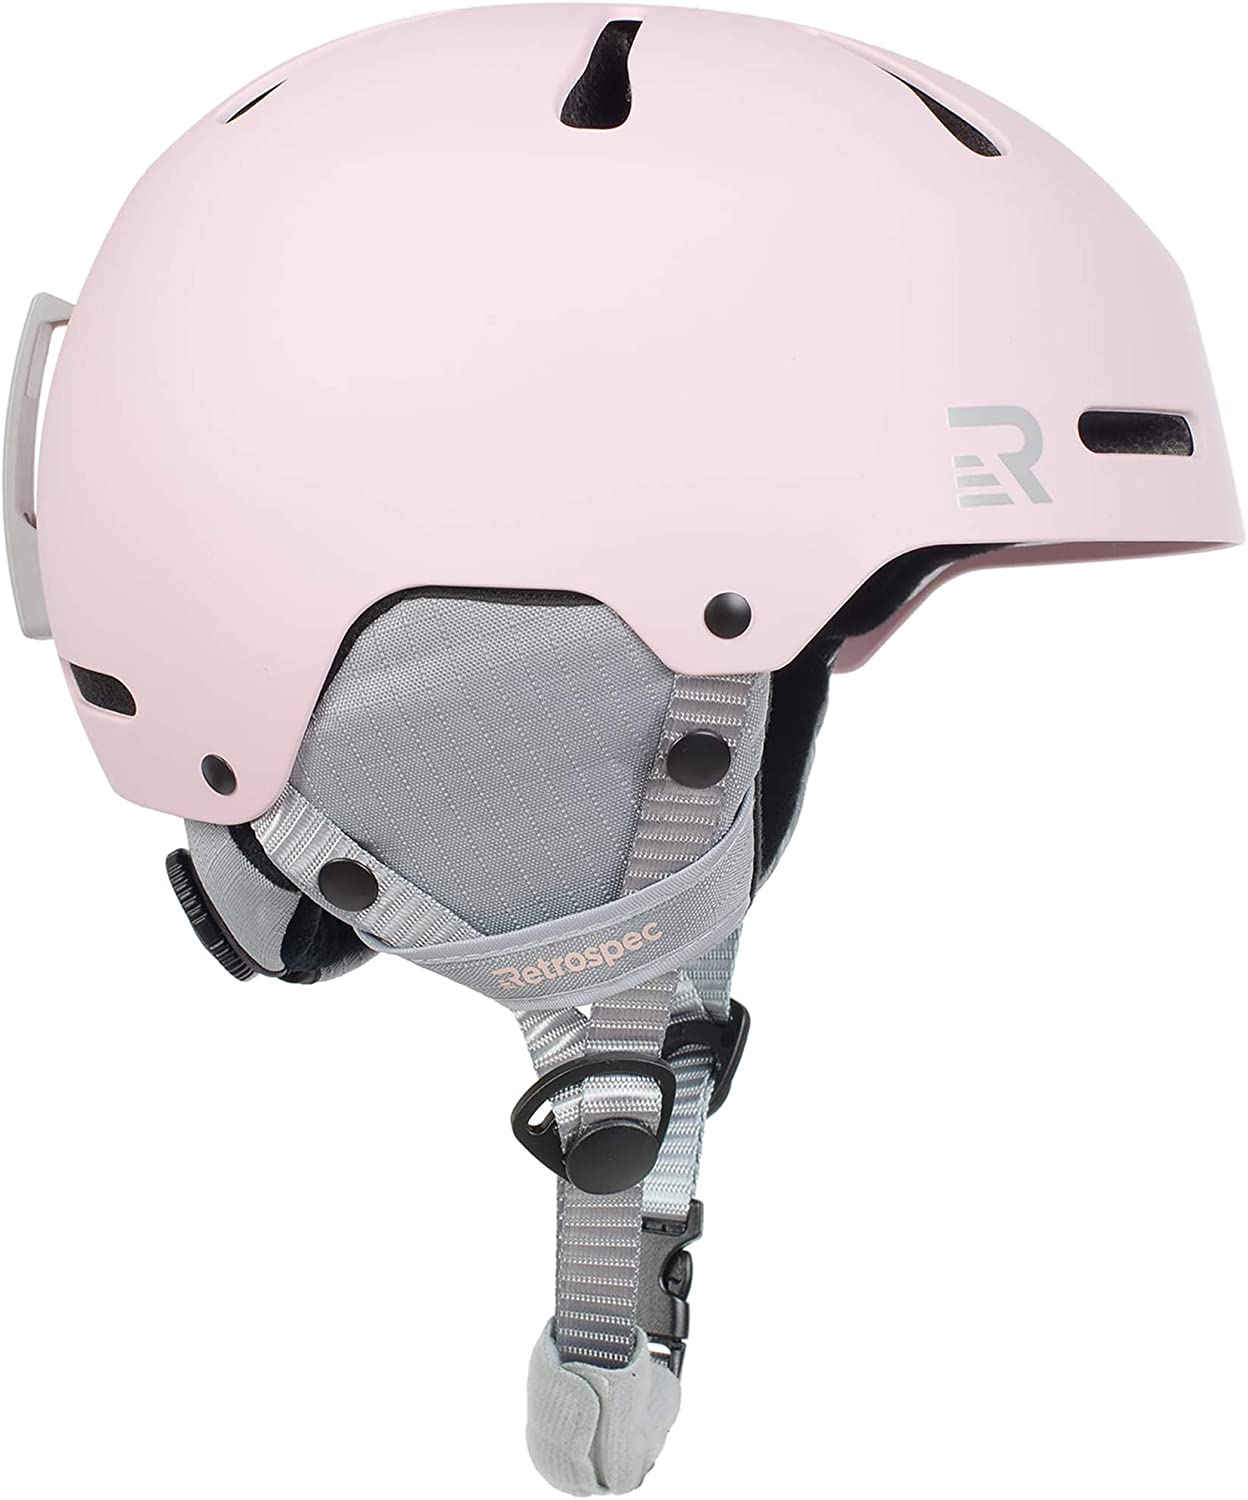 Retrospec Traverse H3 Adult Ski & Snowboard Helmet with 10 Vents 